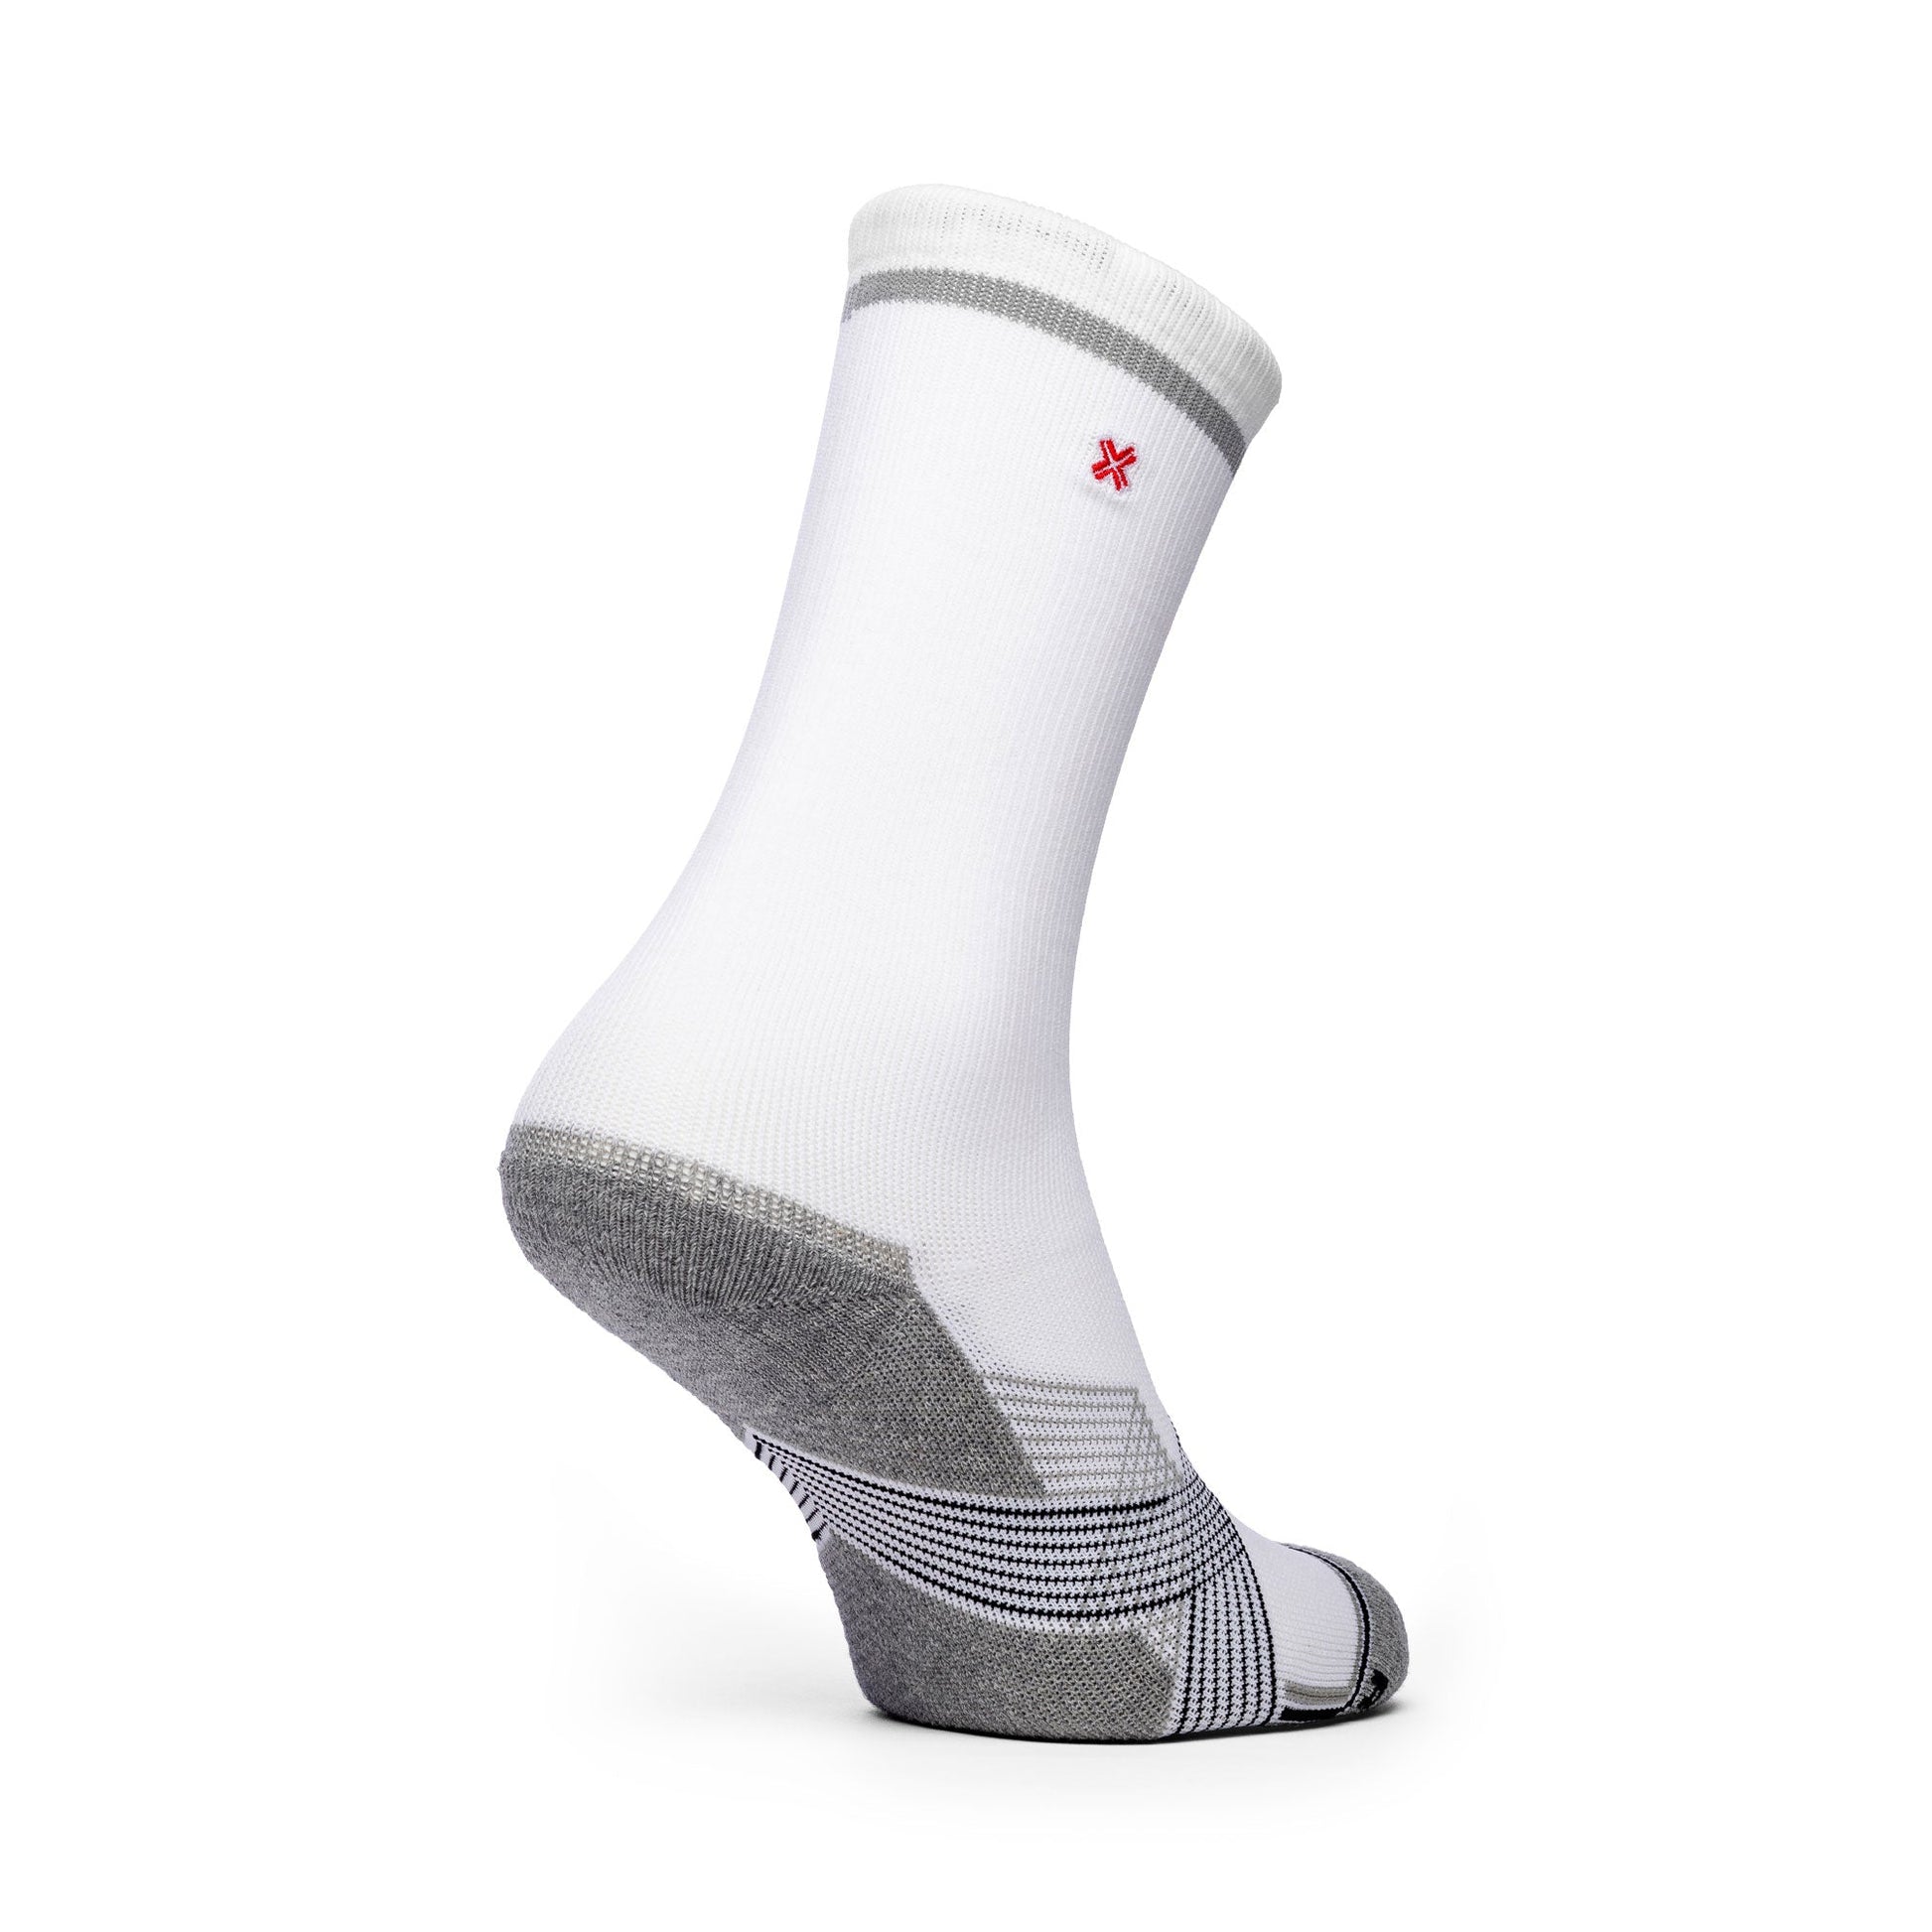 PAYNTR Crew Socks (White) - Heel